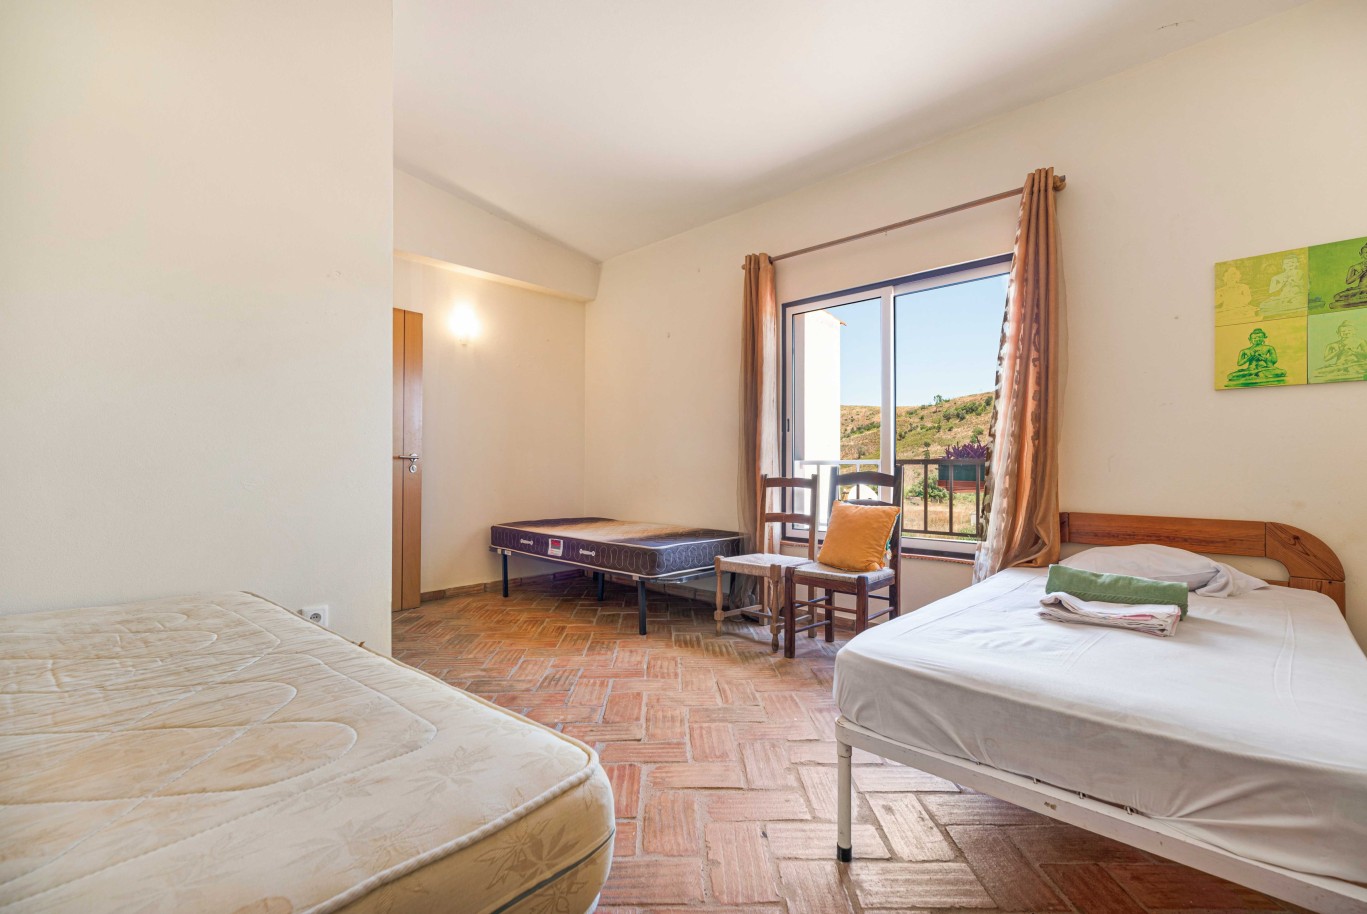 9 Bedroom Country Villa à vendre à Pereira, Algarve_231600